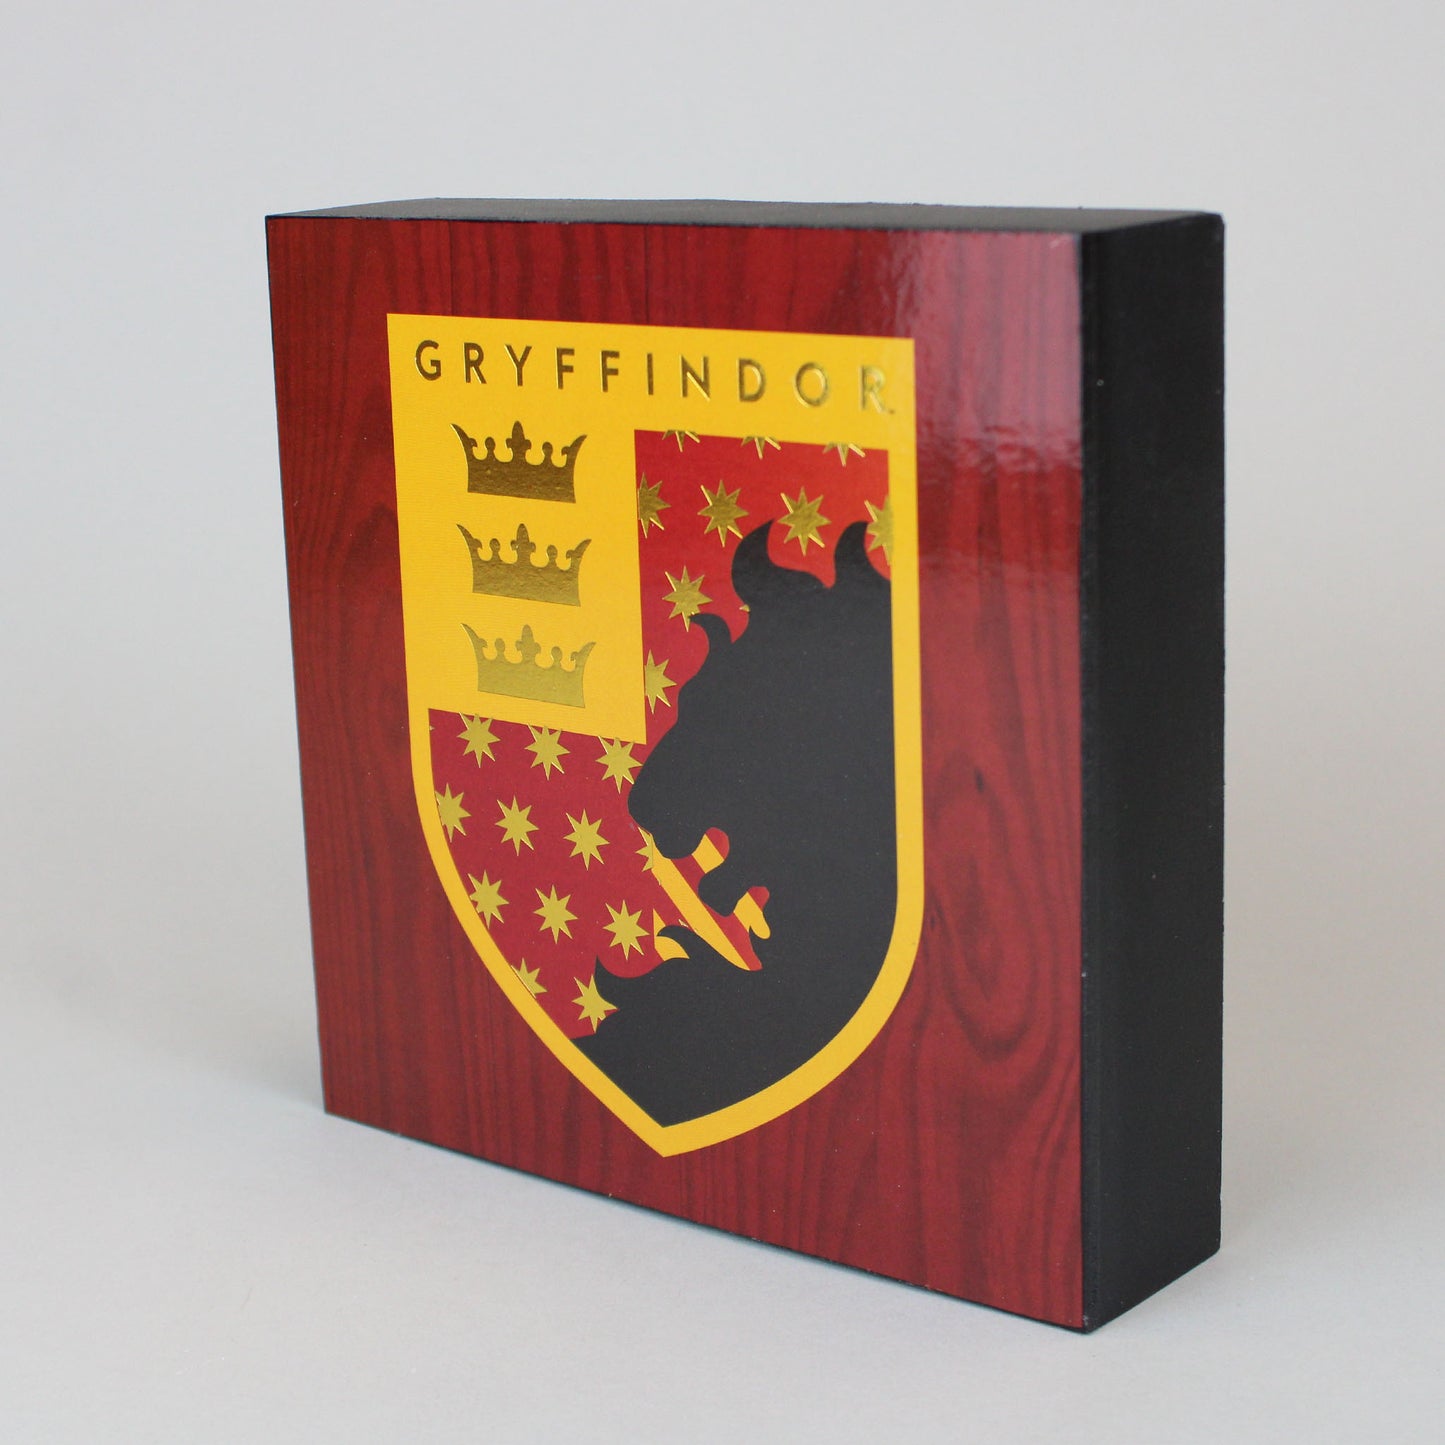 Gryffindor House (Harry Potter) Shield Block Sign